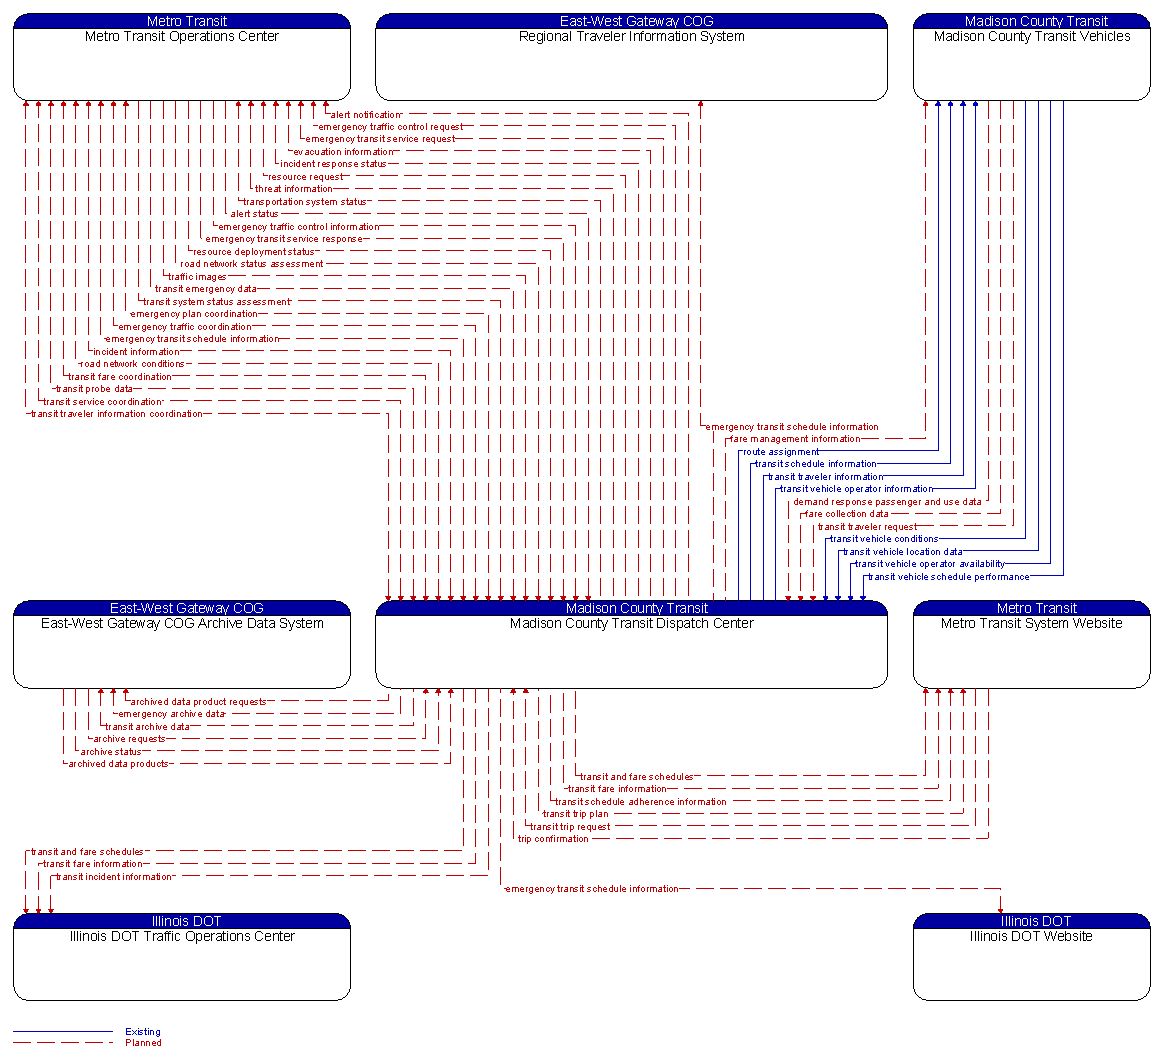 Context Diagram - Madison County Transit Dispatch Center